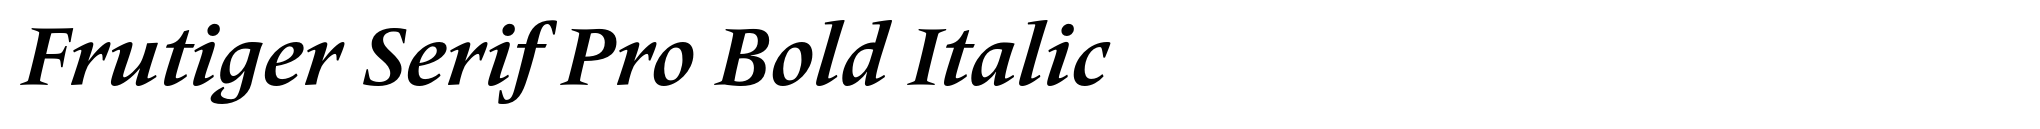 Frutiger Serif Pro Bold Italic image